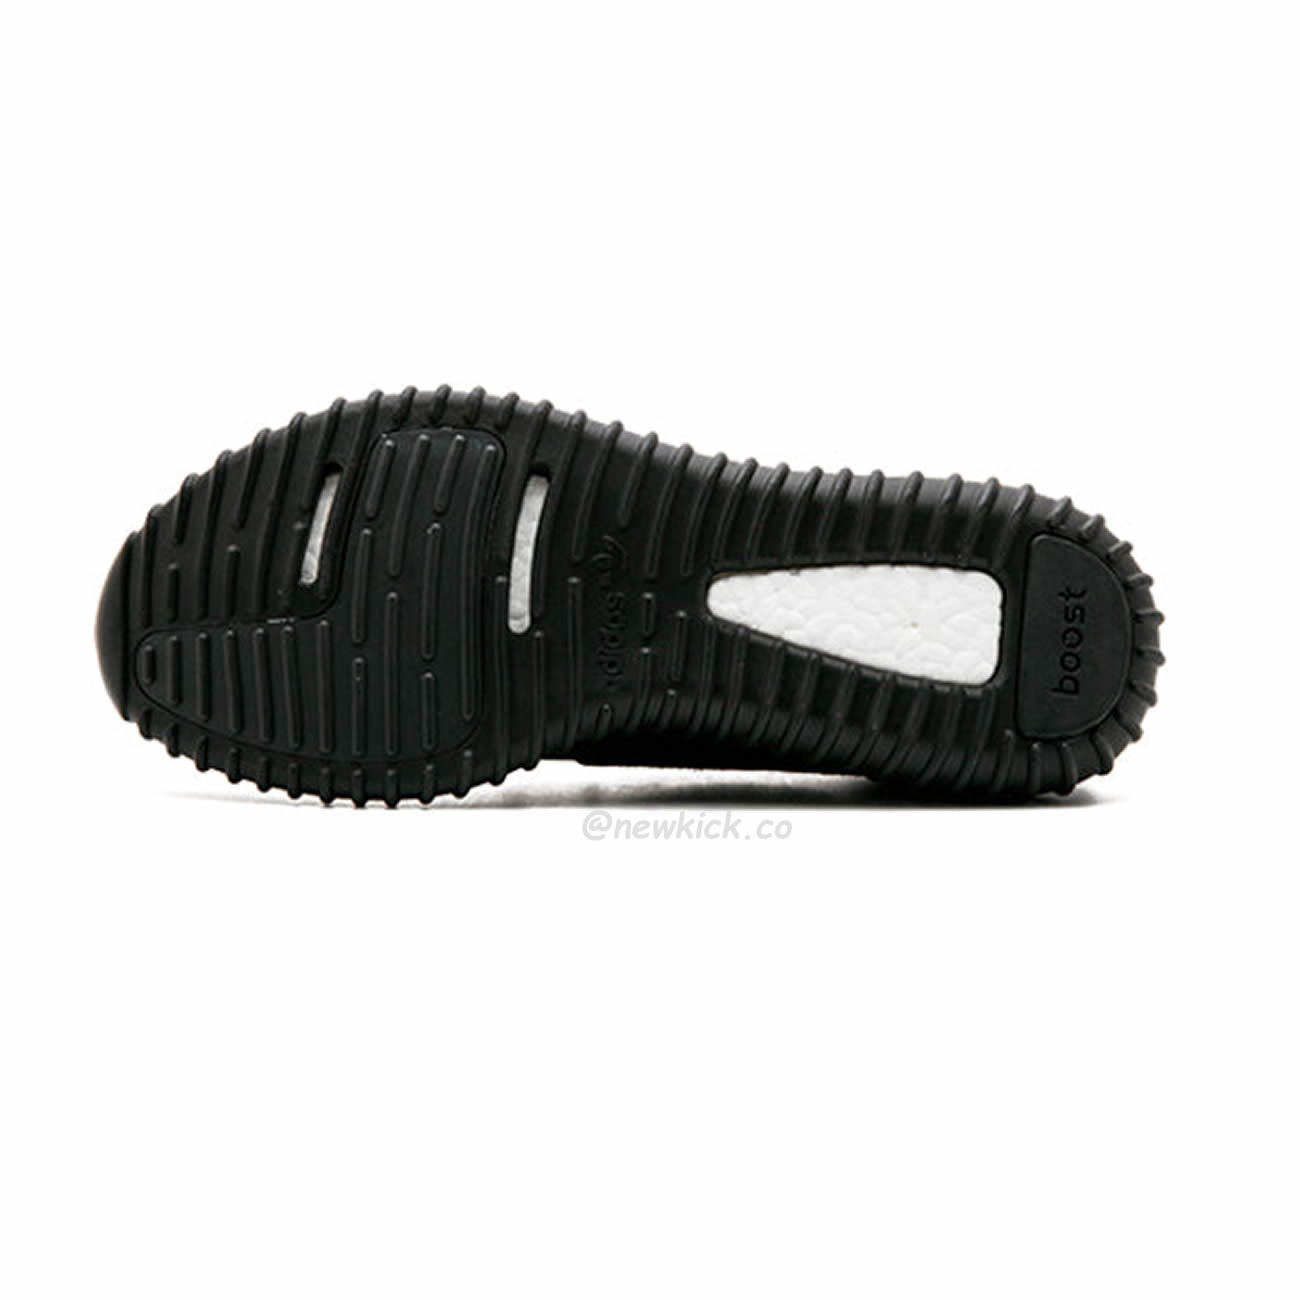 Adidas Yeezy Boost 350 Pirate Black Aq2659 (12) - newkick.org